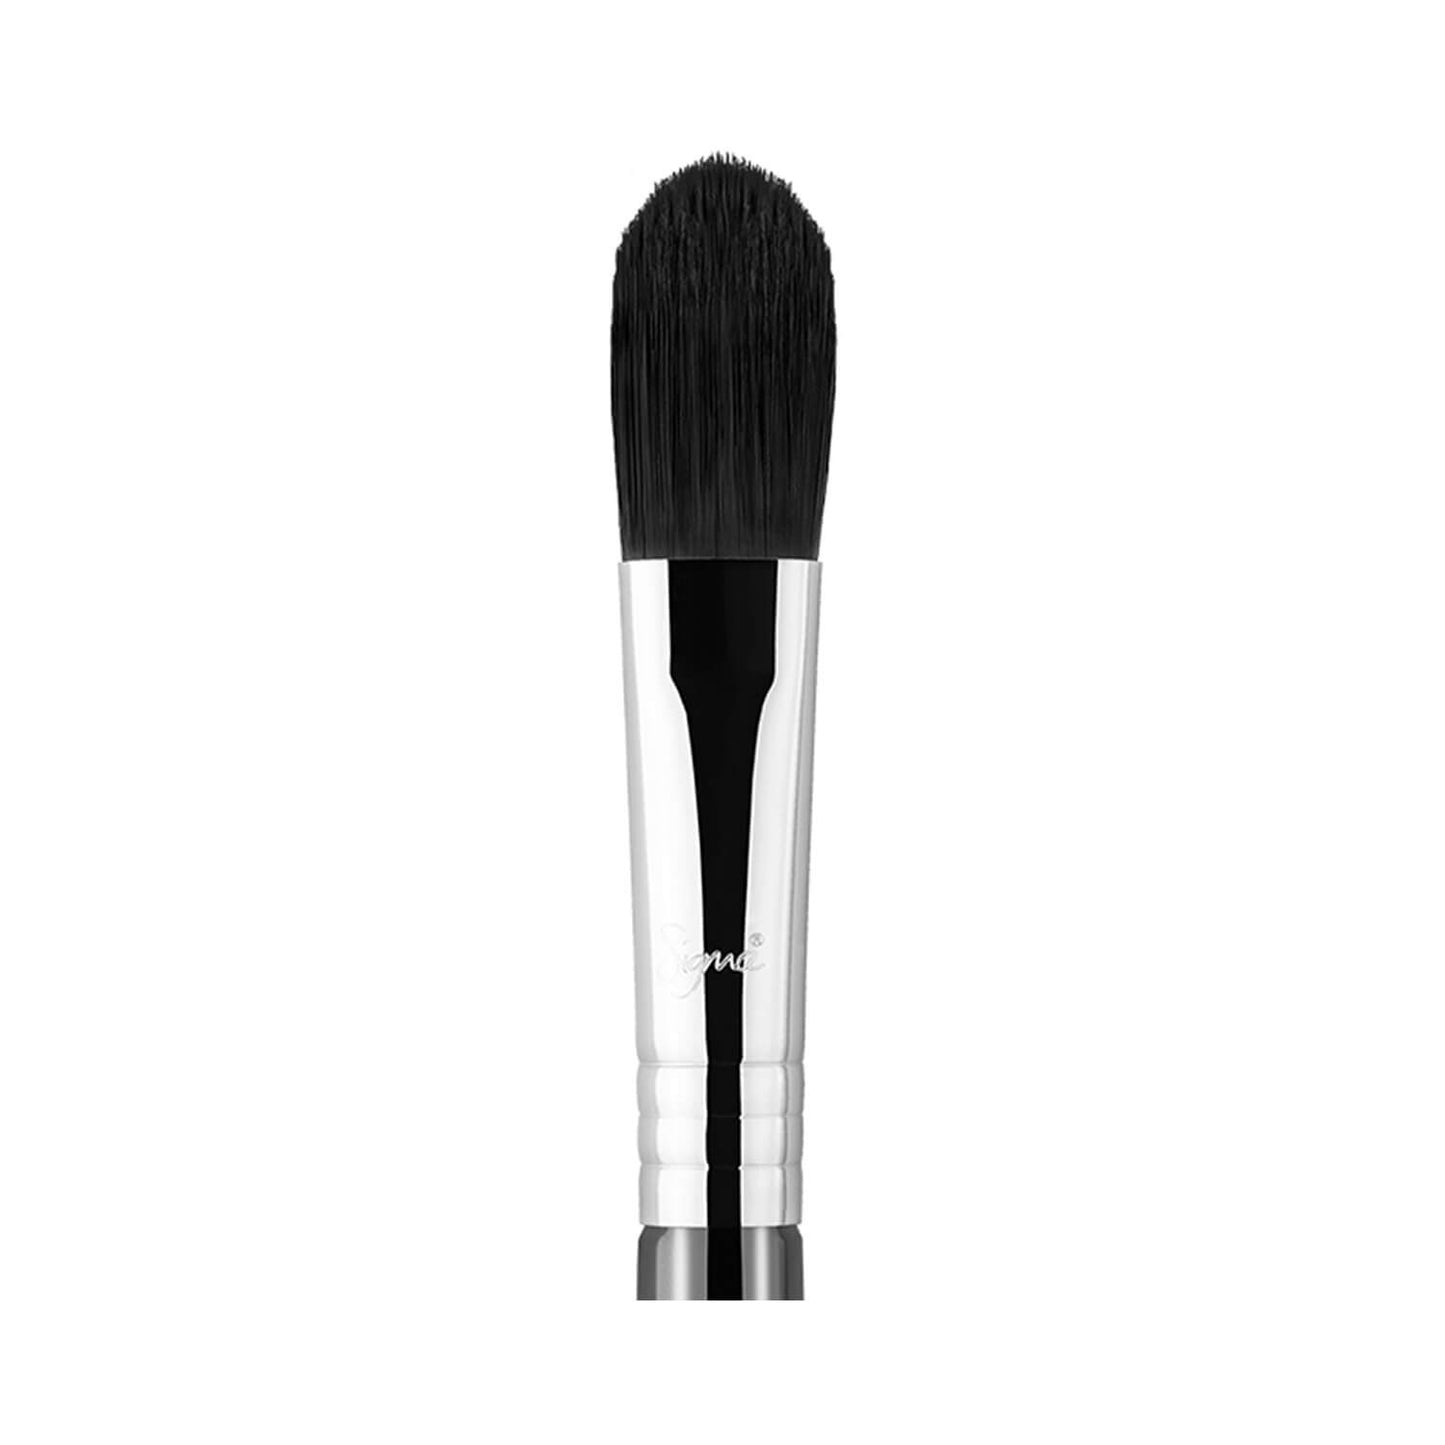 Sigma Beauty F65 Large Concealer Brush